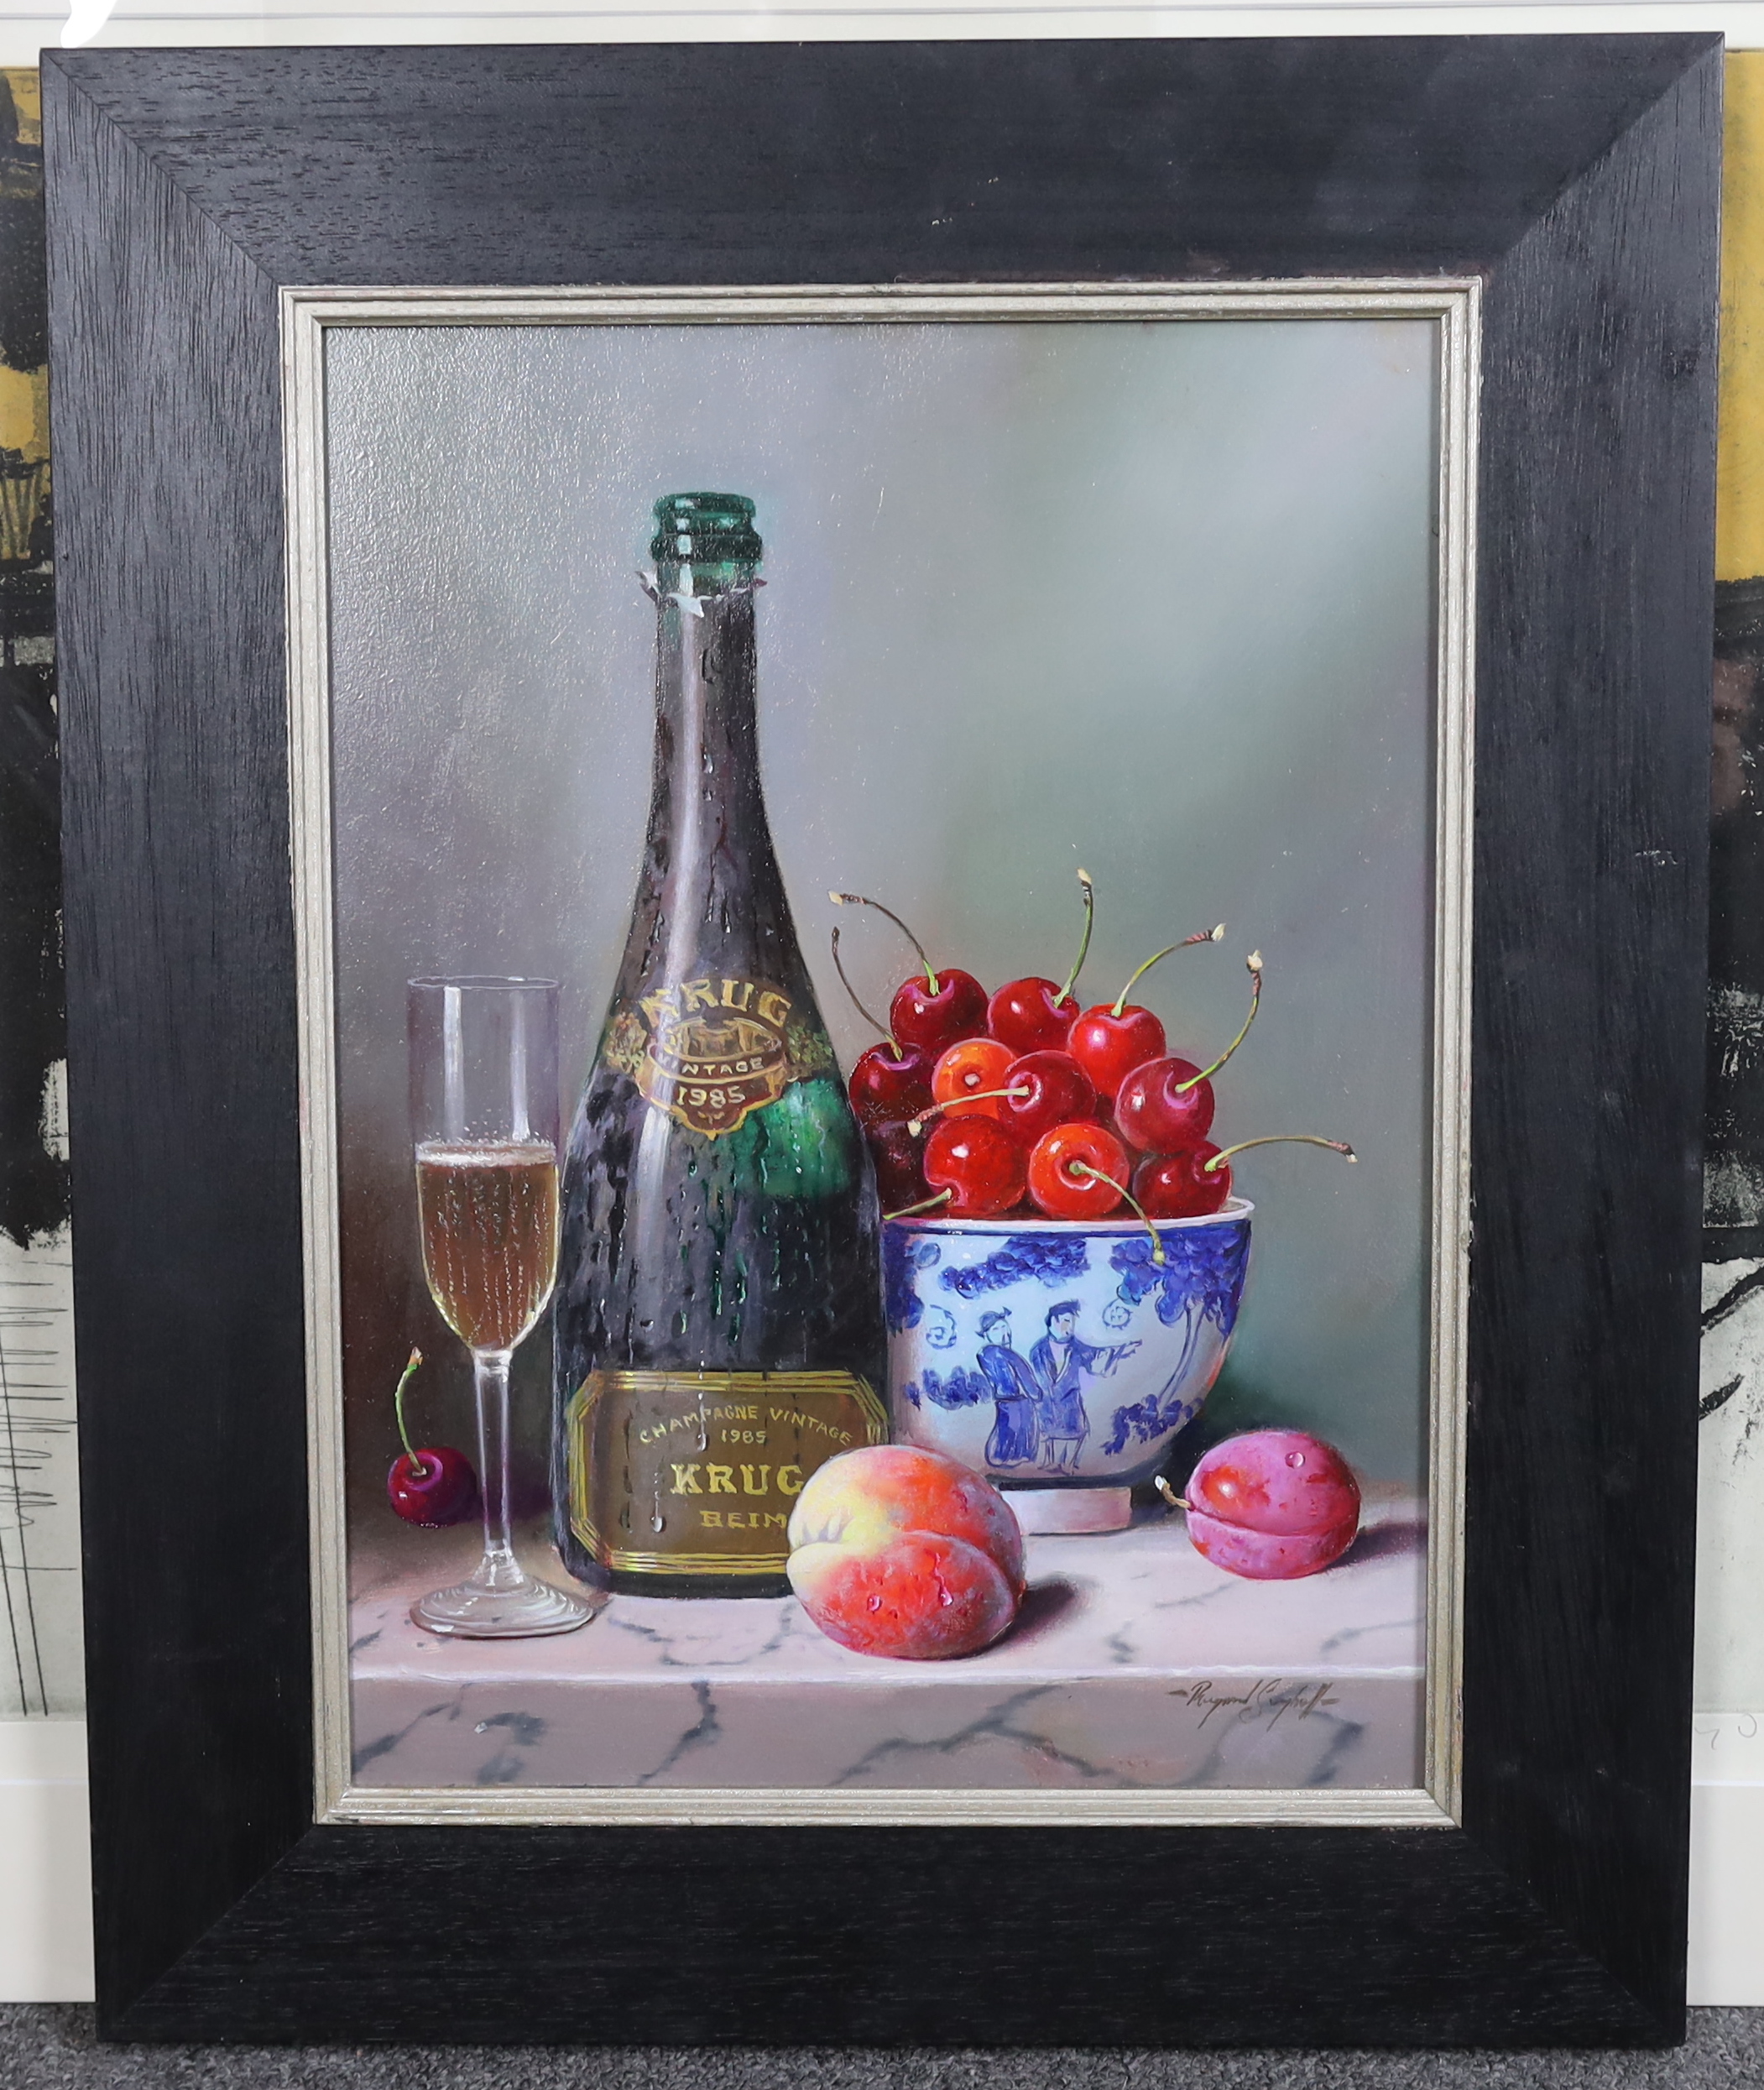 Raymond Campbell (English, b.1956), '1985 Vintage Krug Champagne', oil on panel, 40 x 30cm